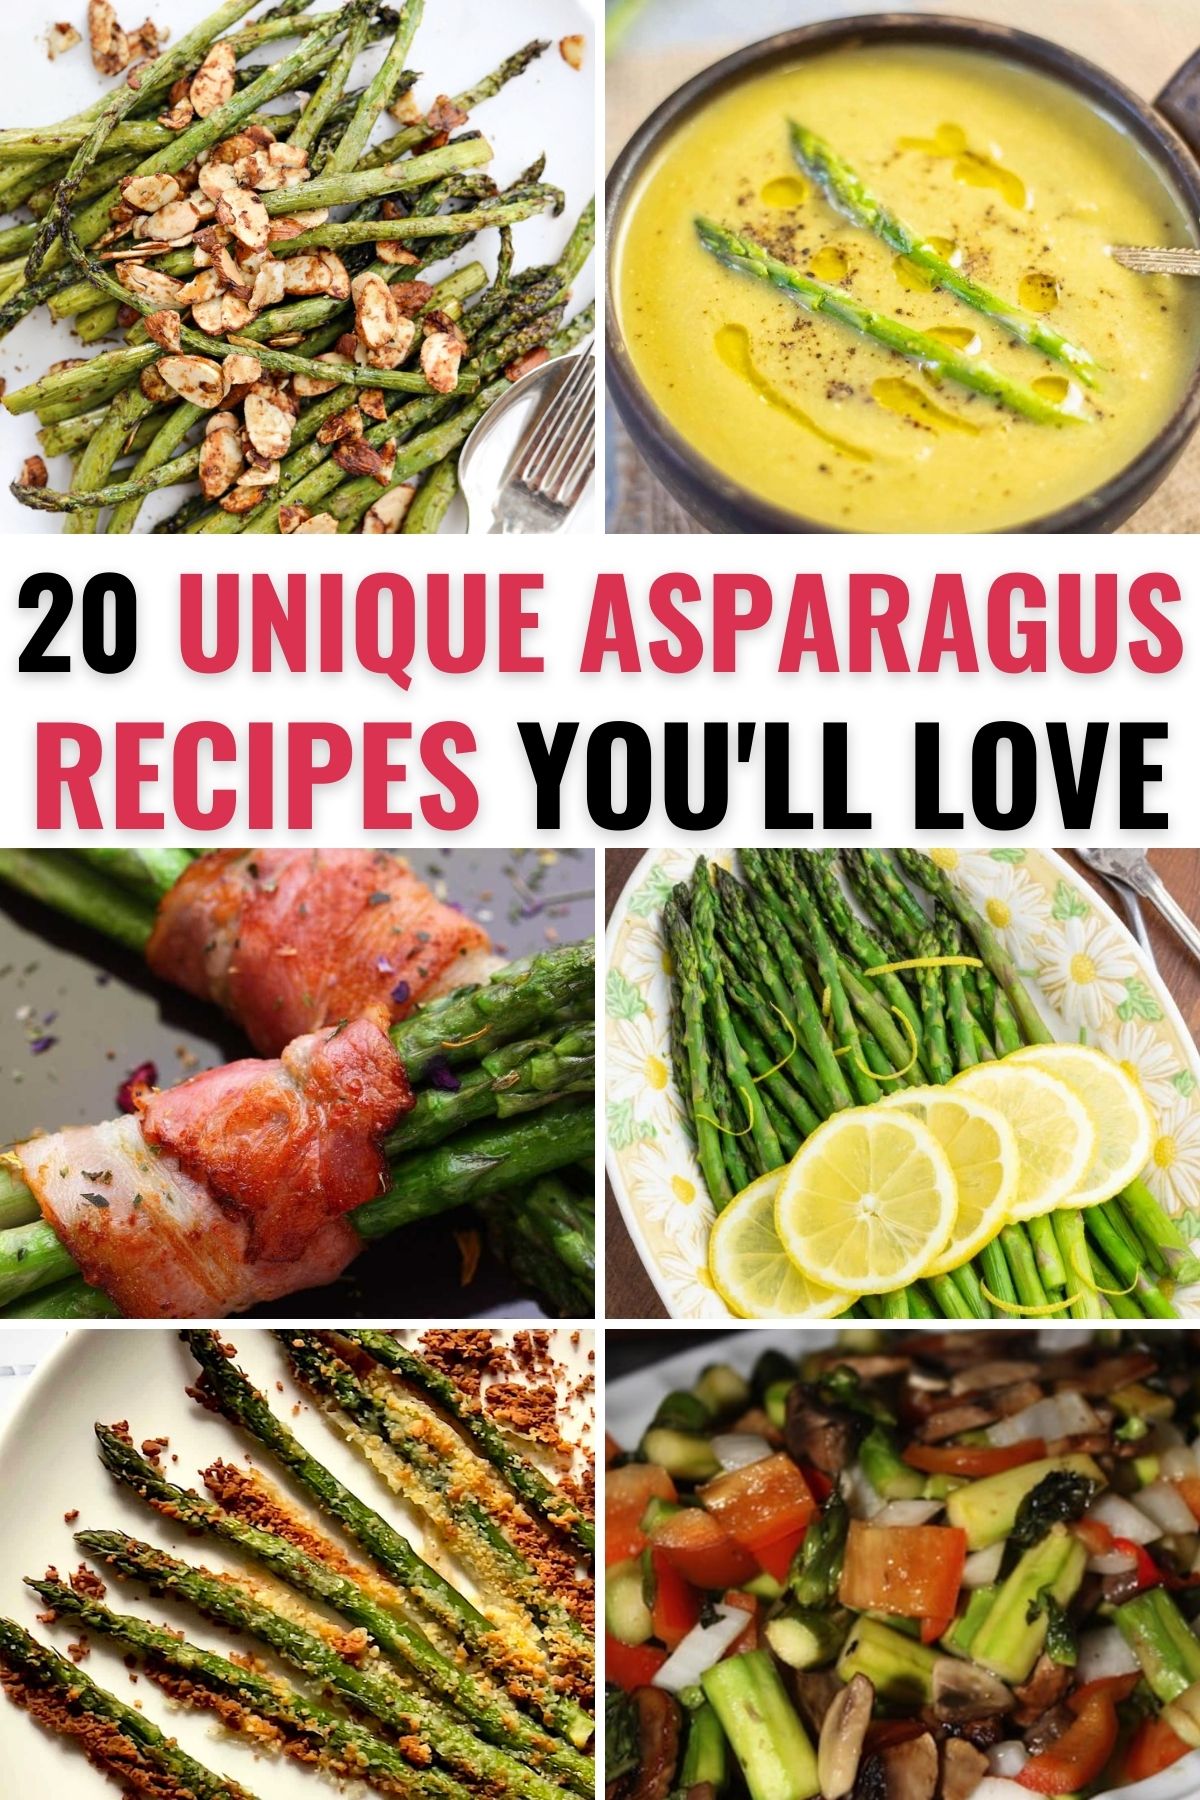 A collection of unique asparagus recipes.